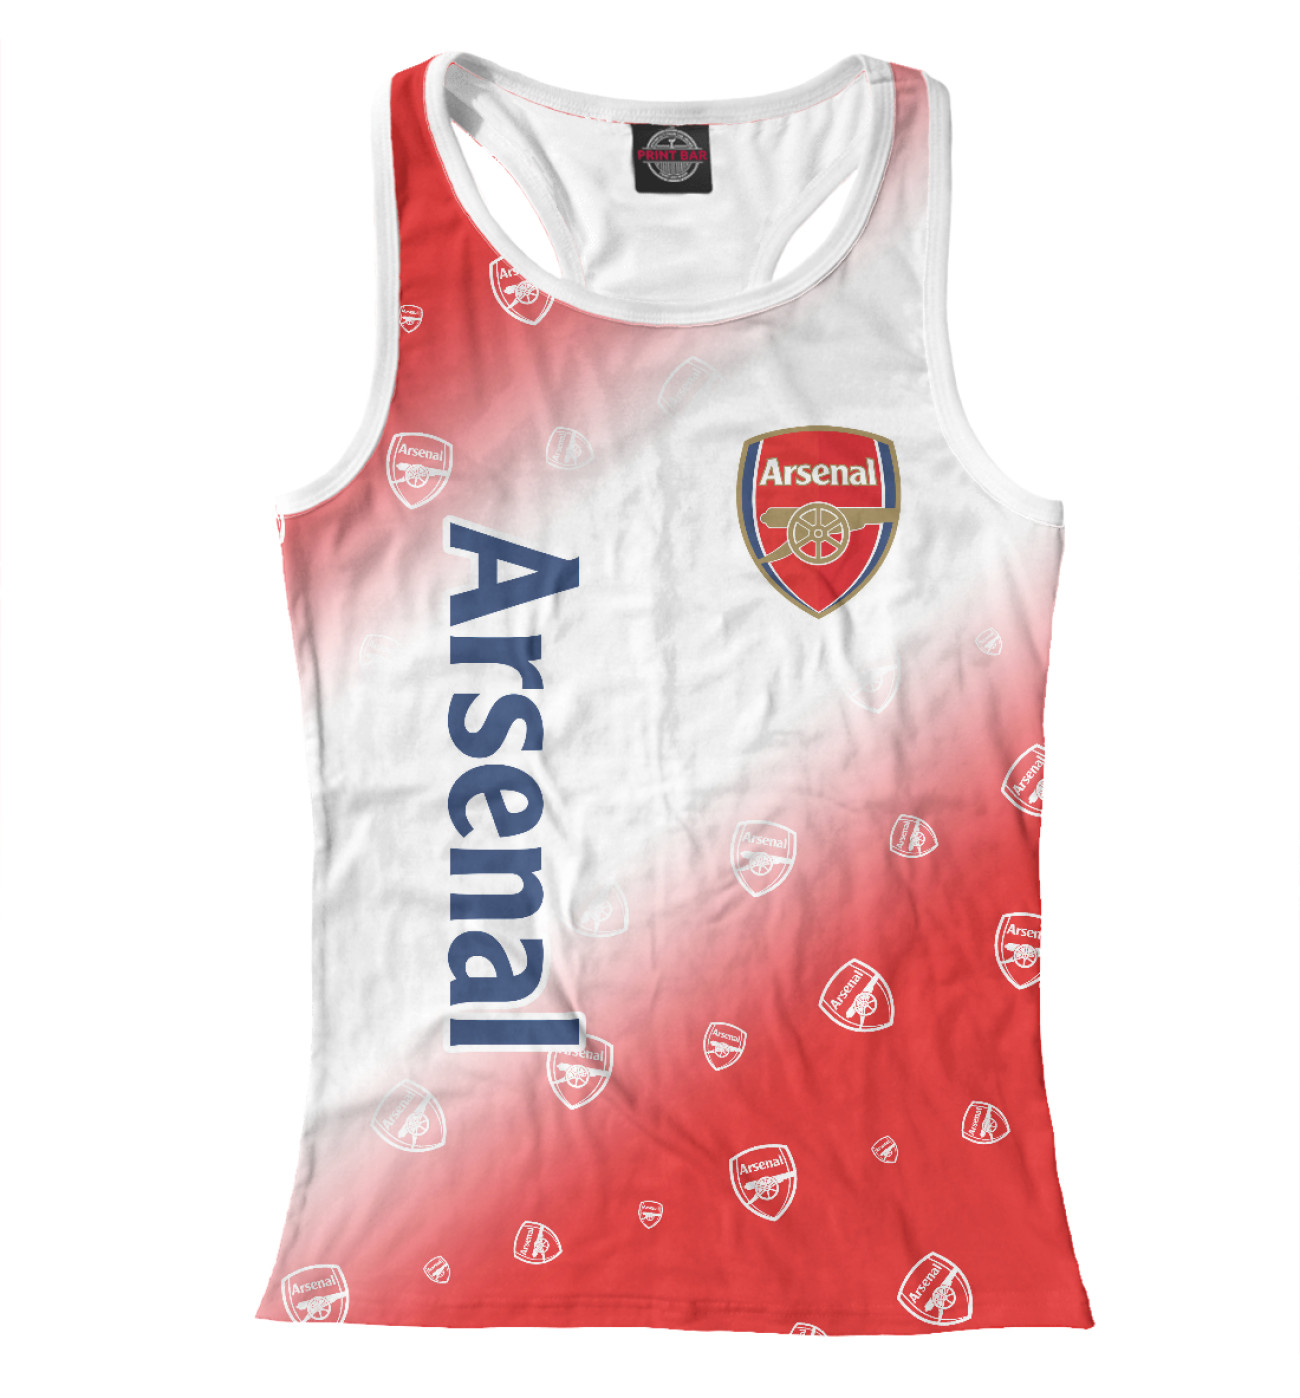 Женская Борцовка Arsenal / Арсенал, артикул: ARS-157201-mayb-1